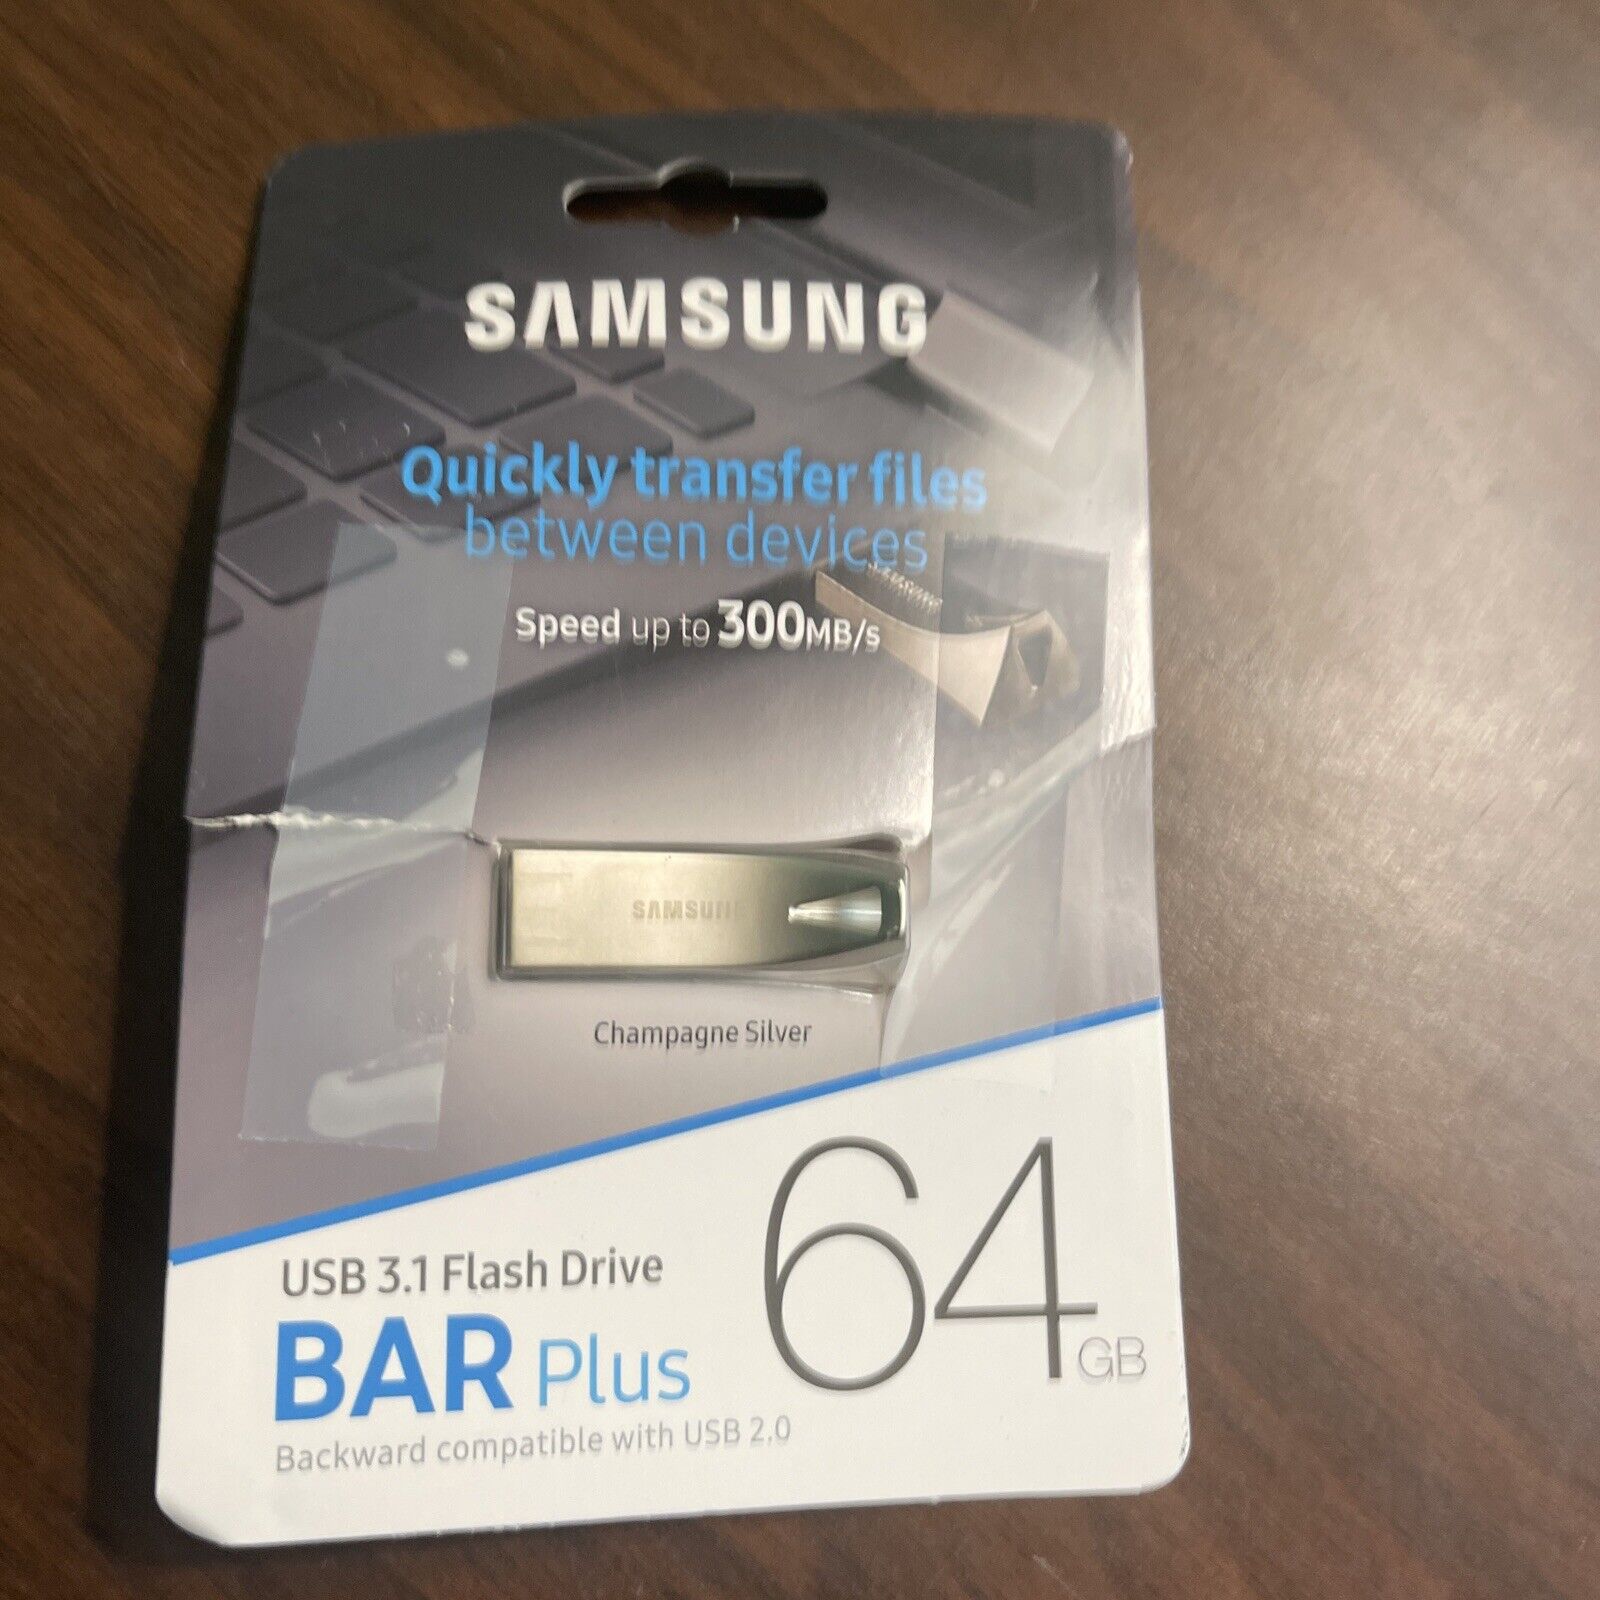 Samsung MUF-64BE3/AM 64GB Bar Plus USB 3.1 Flash Drive 300MB/S